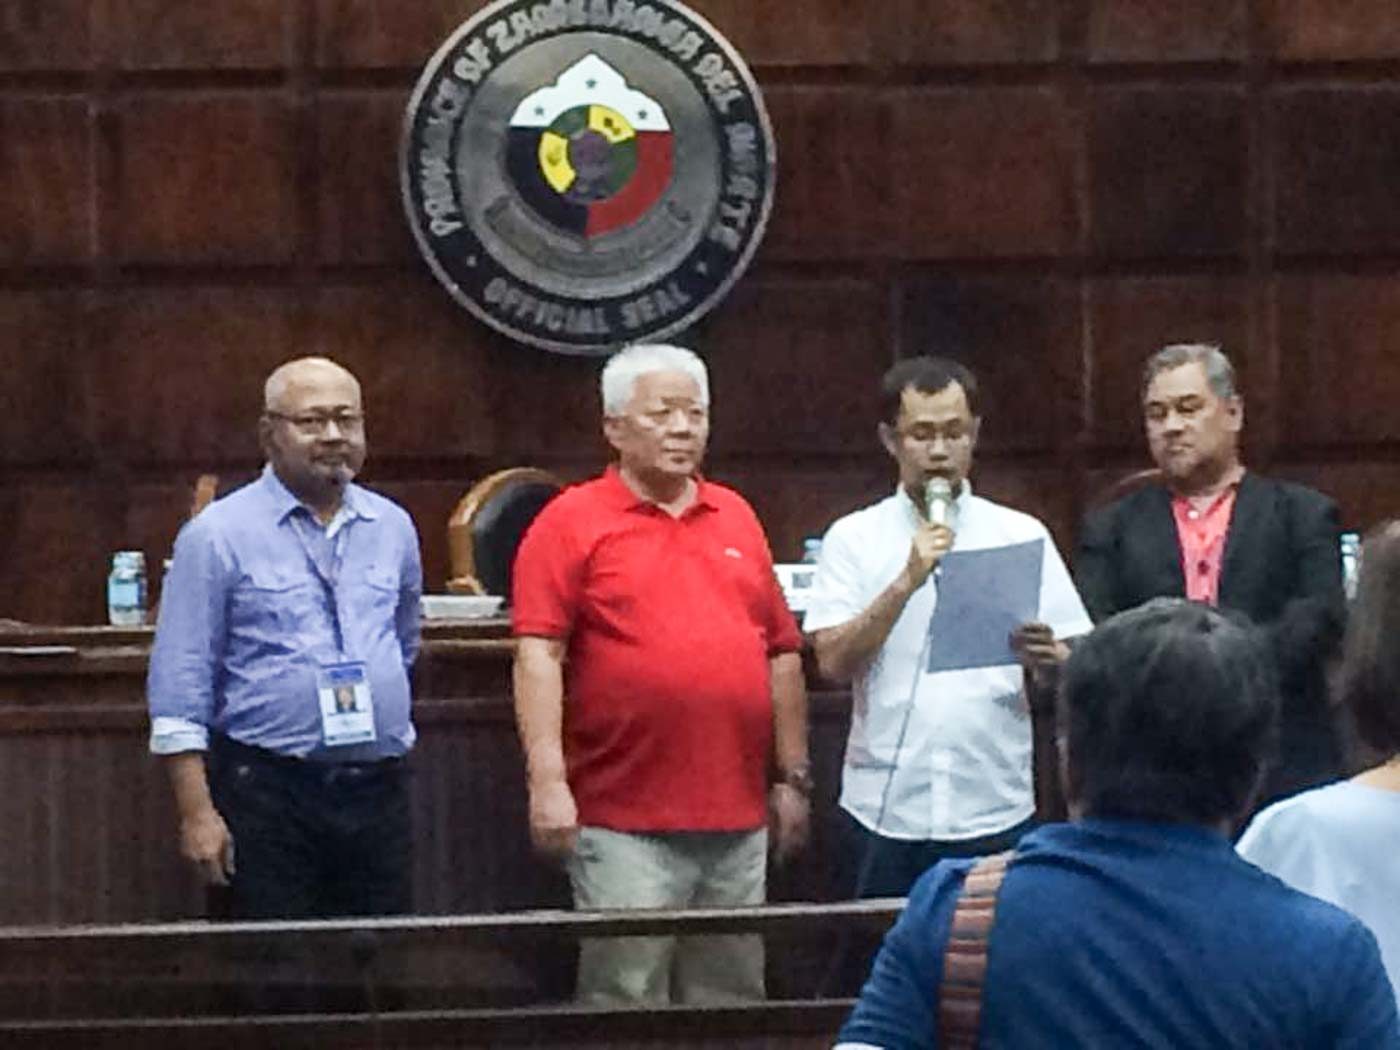 Uy retains governorship of Zamboanga del Norte